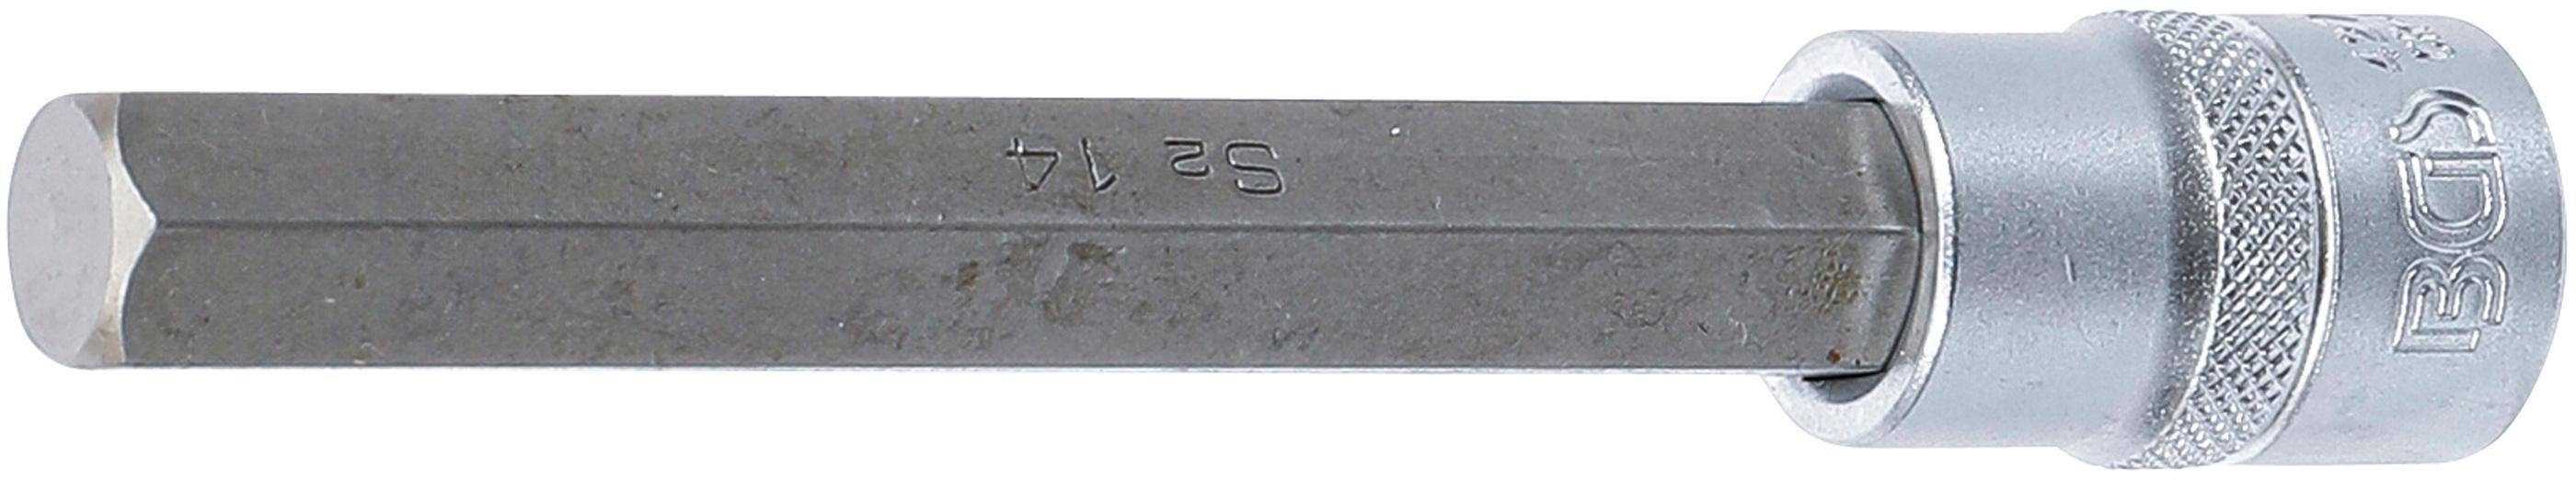 Länge 12,5 mm, mm Innensechskant BGS Antrieb 14 Sechskant-Bit technic Bit-Einsatz, mm (1/2), Innenvierkant 140